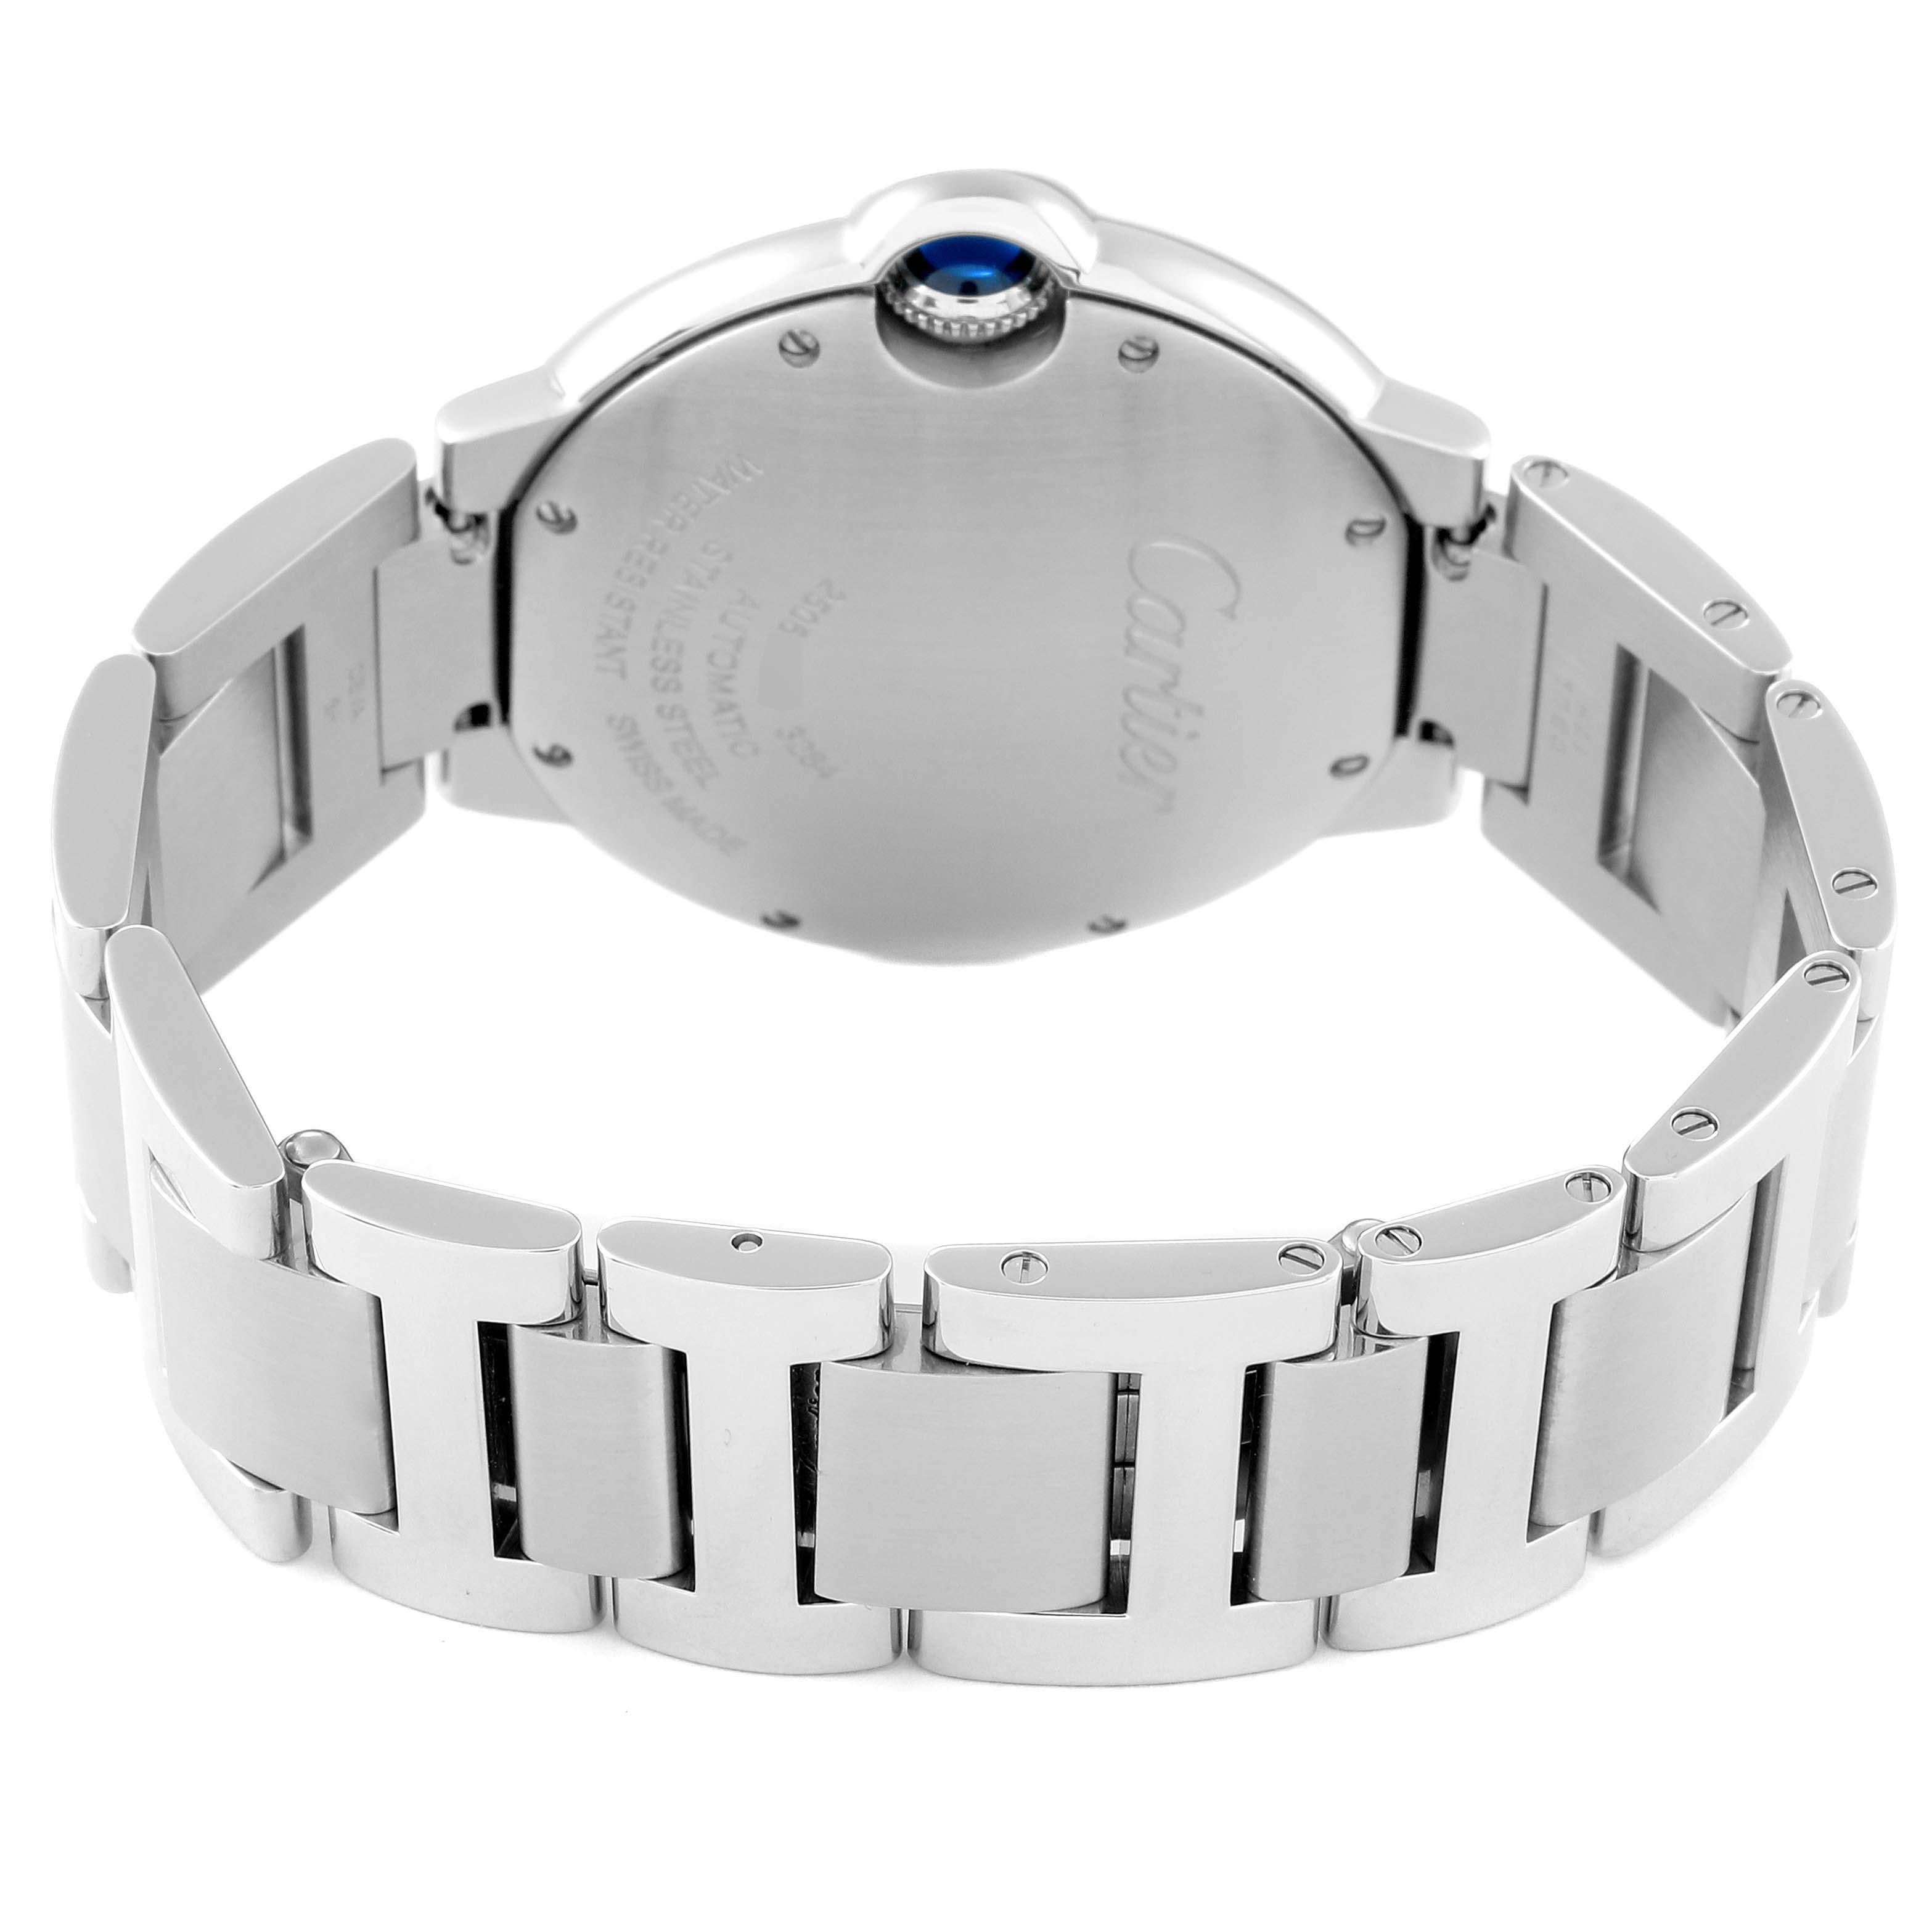 Cartier Ballon Bleu Midsize Silver Dial Steel Ladies Watch W6920046 2